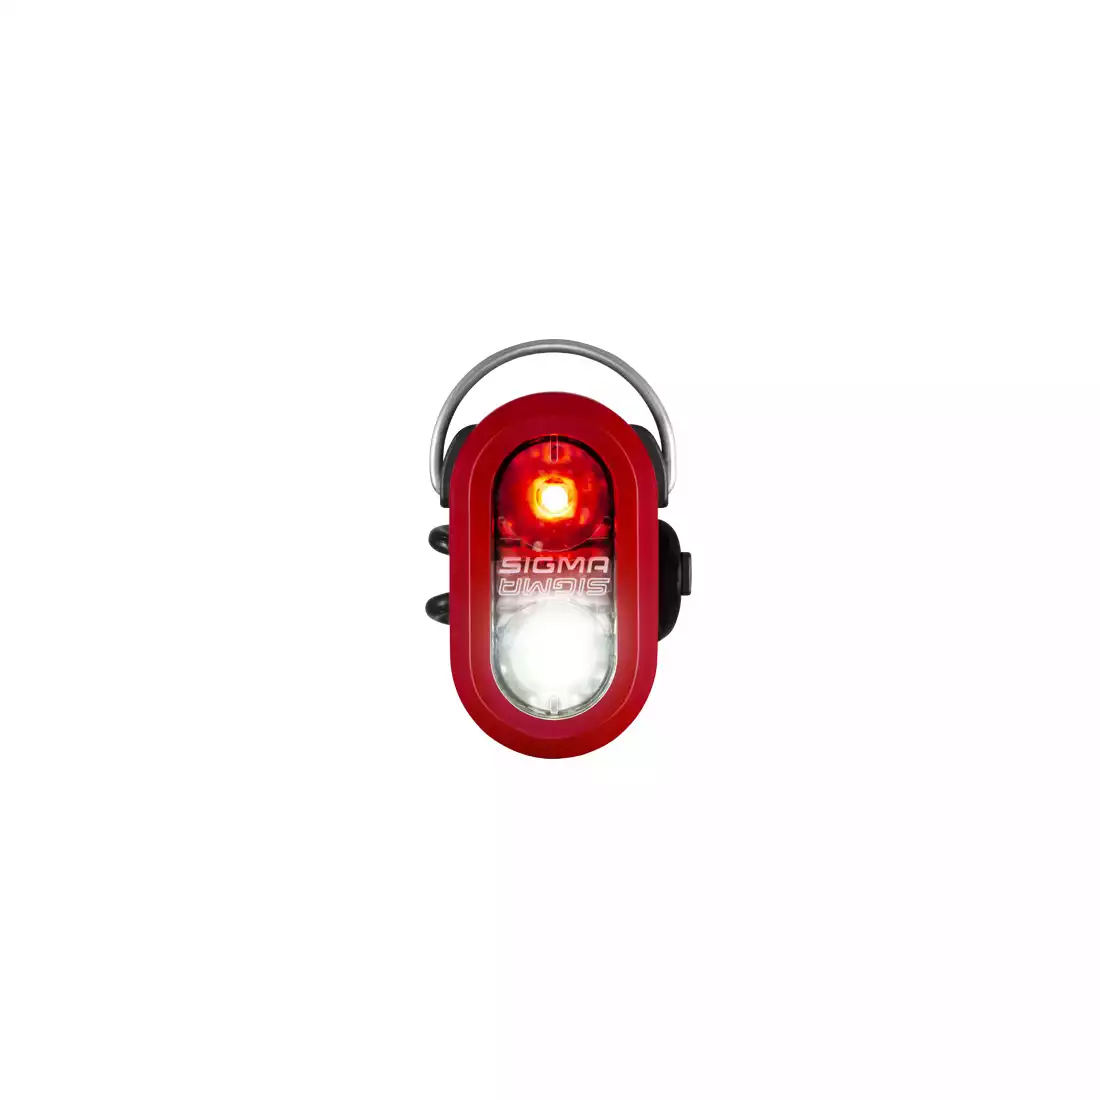 Sigma lampka rowerowa MICRO DUO czerwona 17253